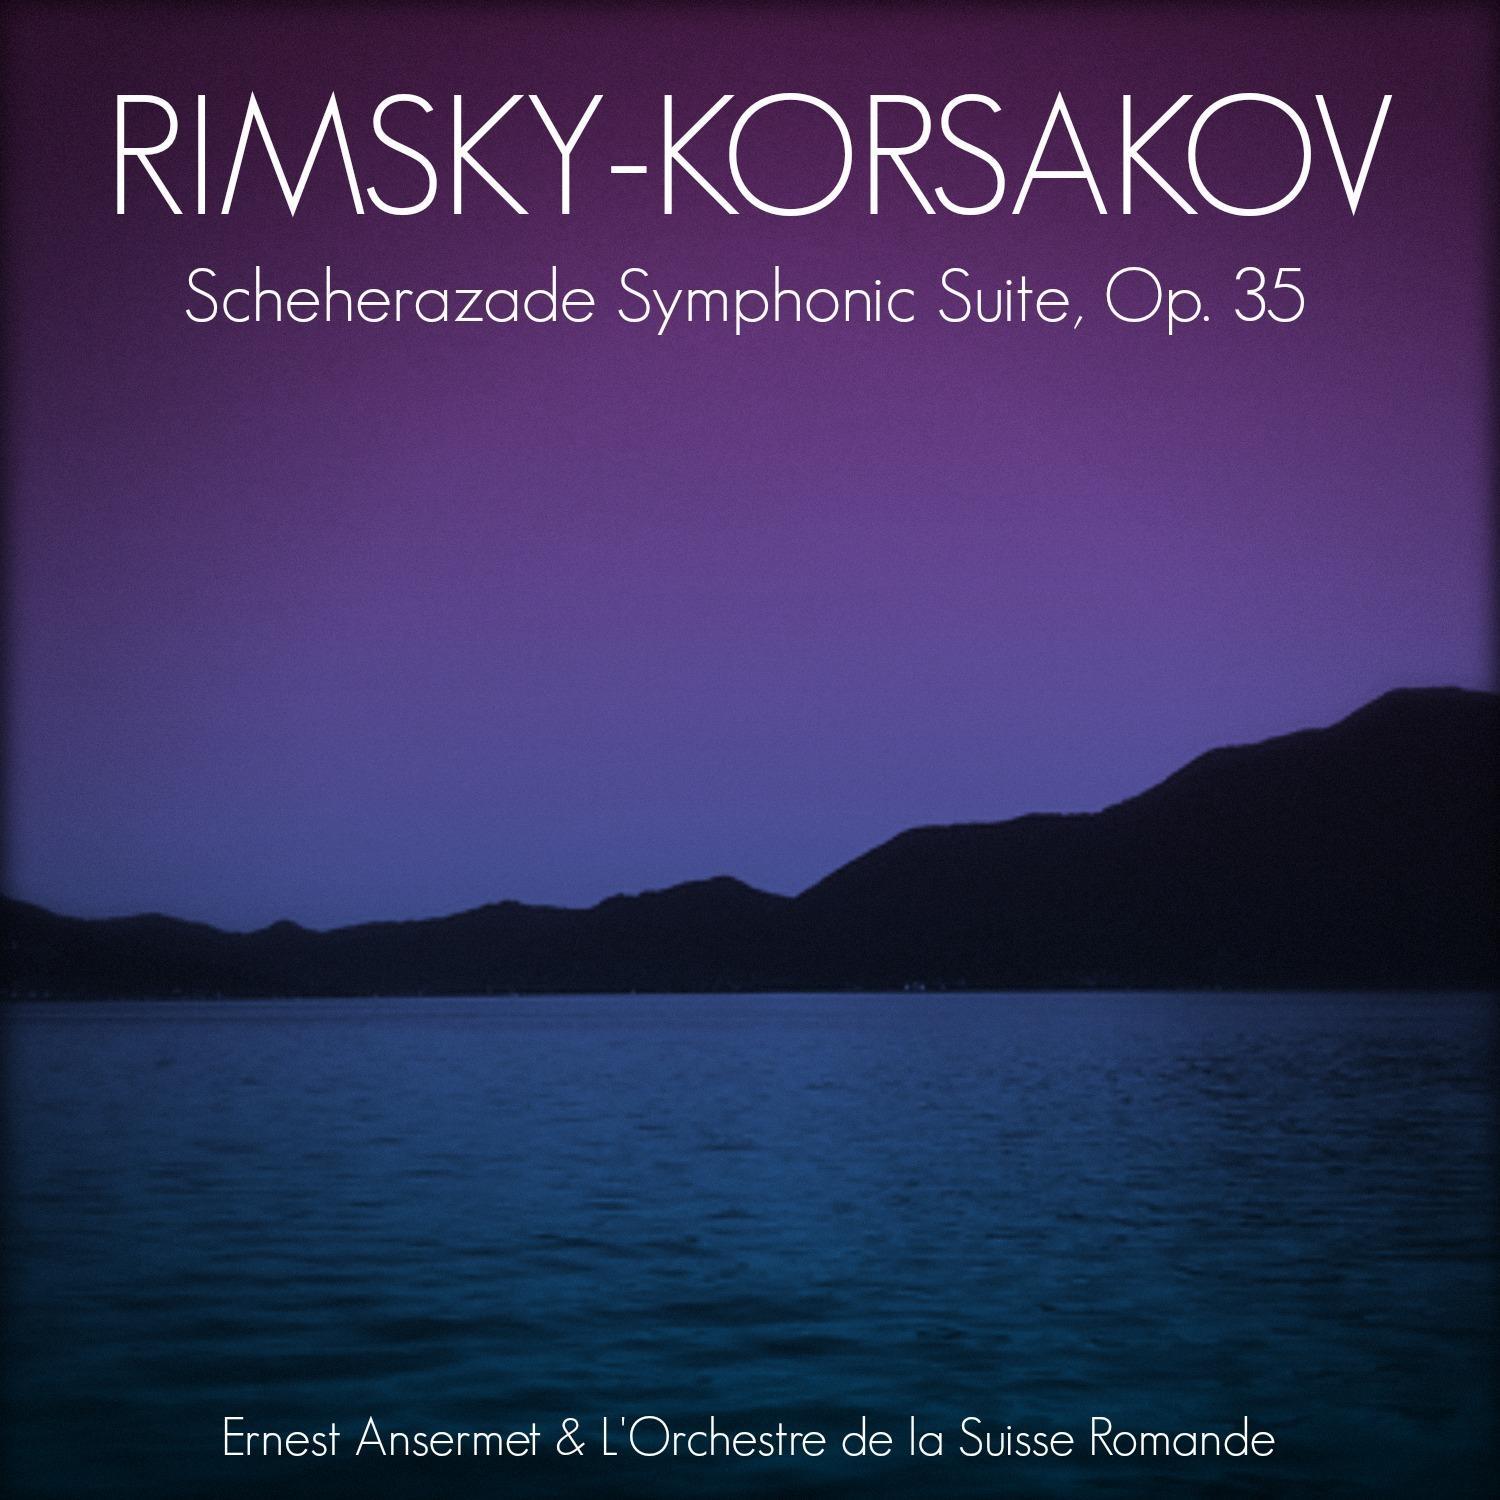 Scheherazade Symphonic Suite, Op. 35: The Sea and Sinbad's Ship